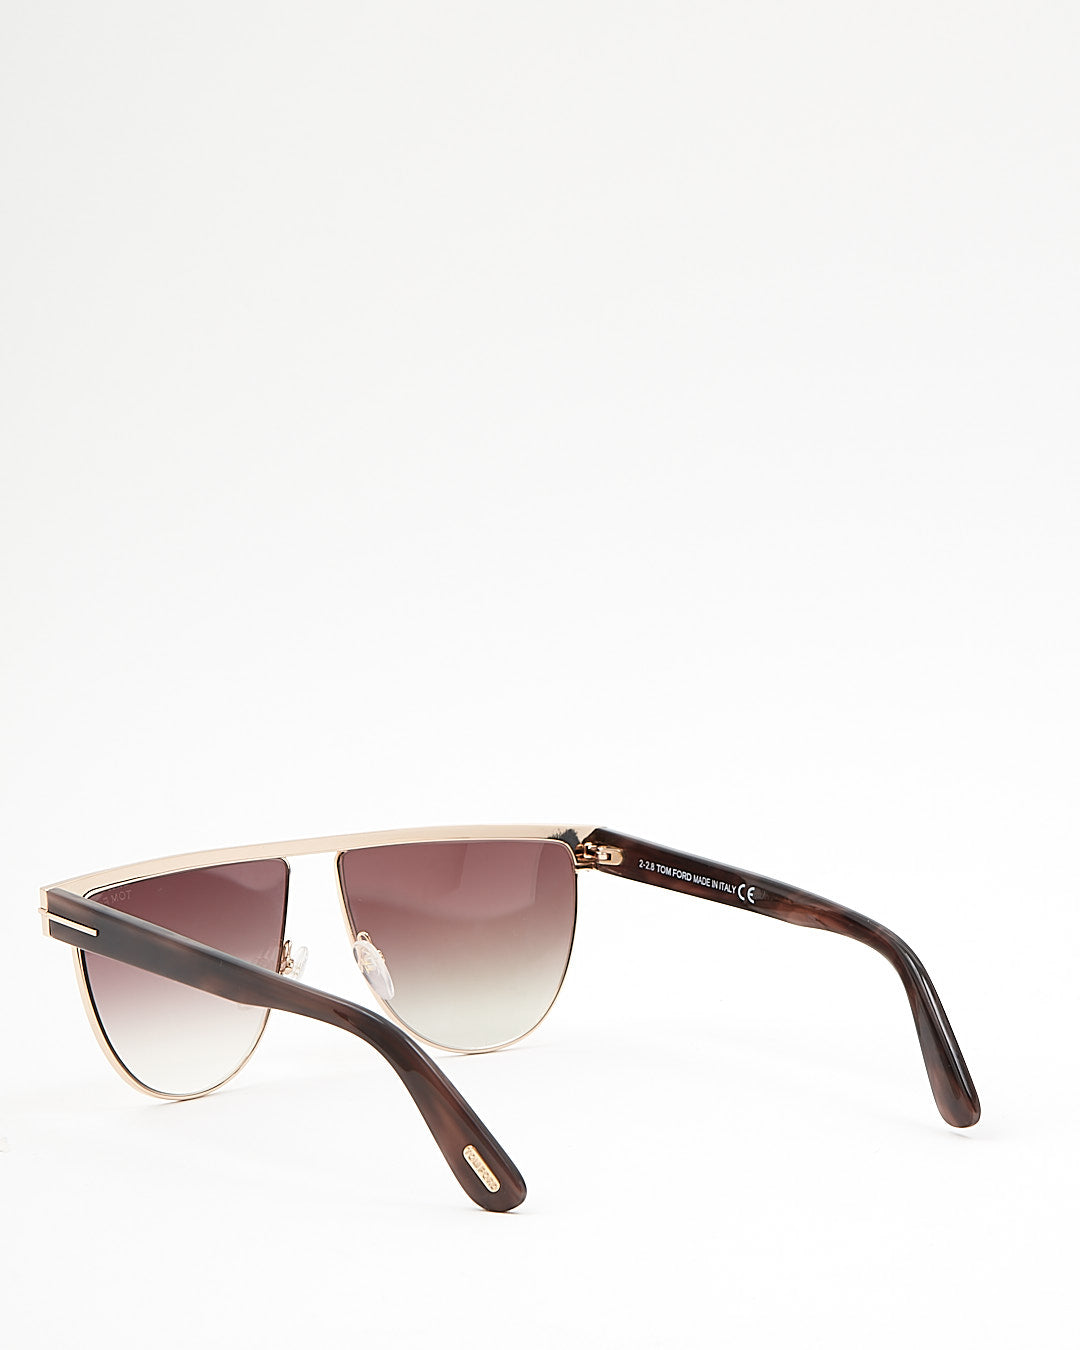 Tom Ford Pink Gradient Lens Stephanie-02 Tf570 Sunglasses